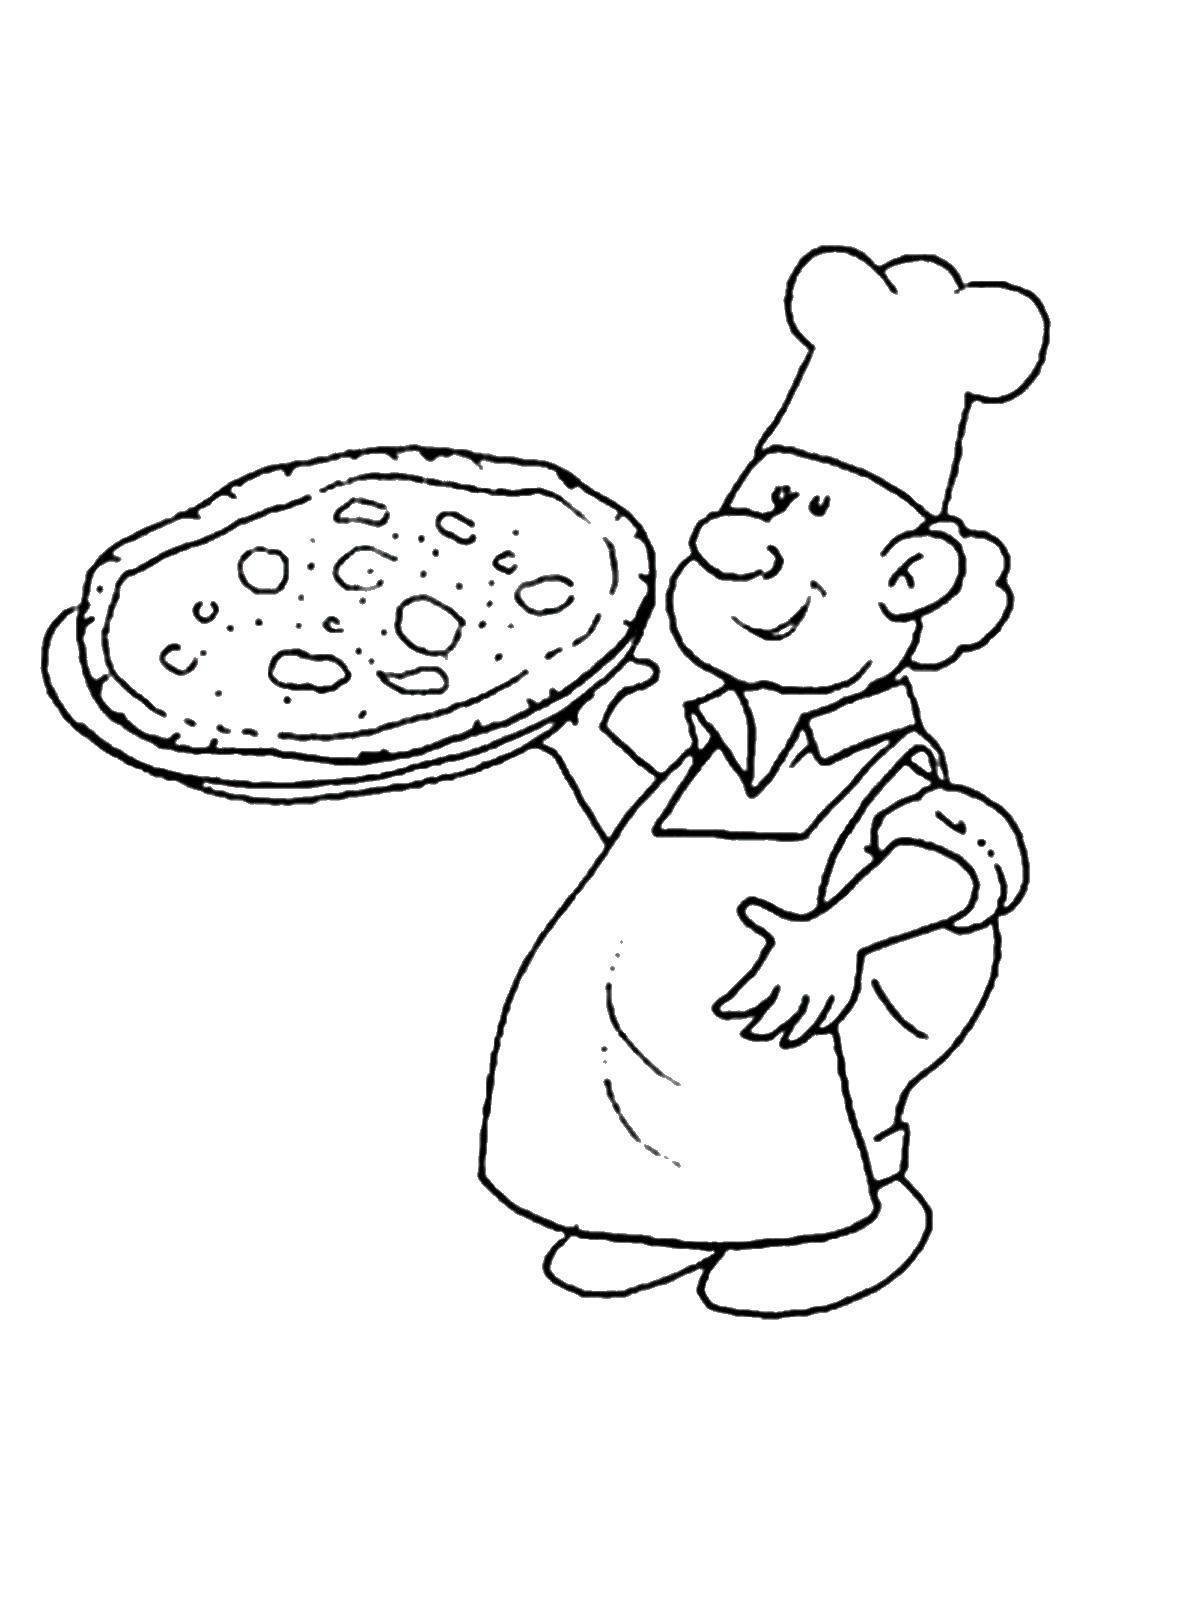 Раскраска повар и пицца (повар, пицца)